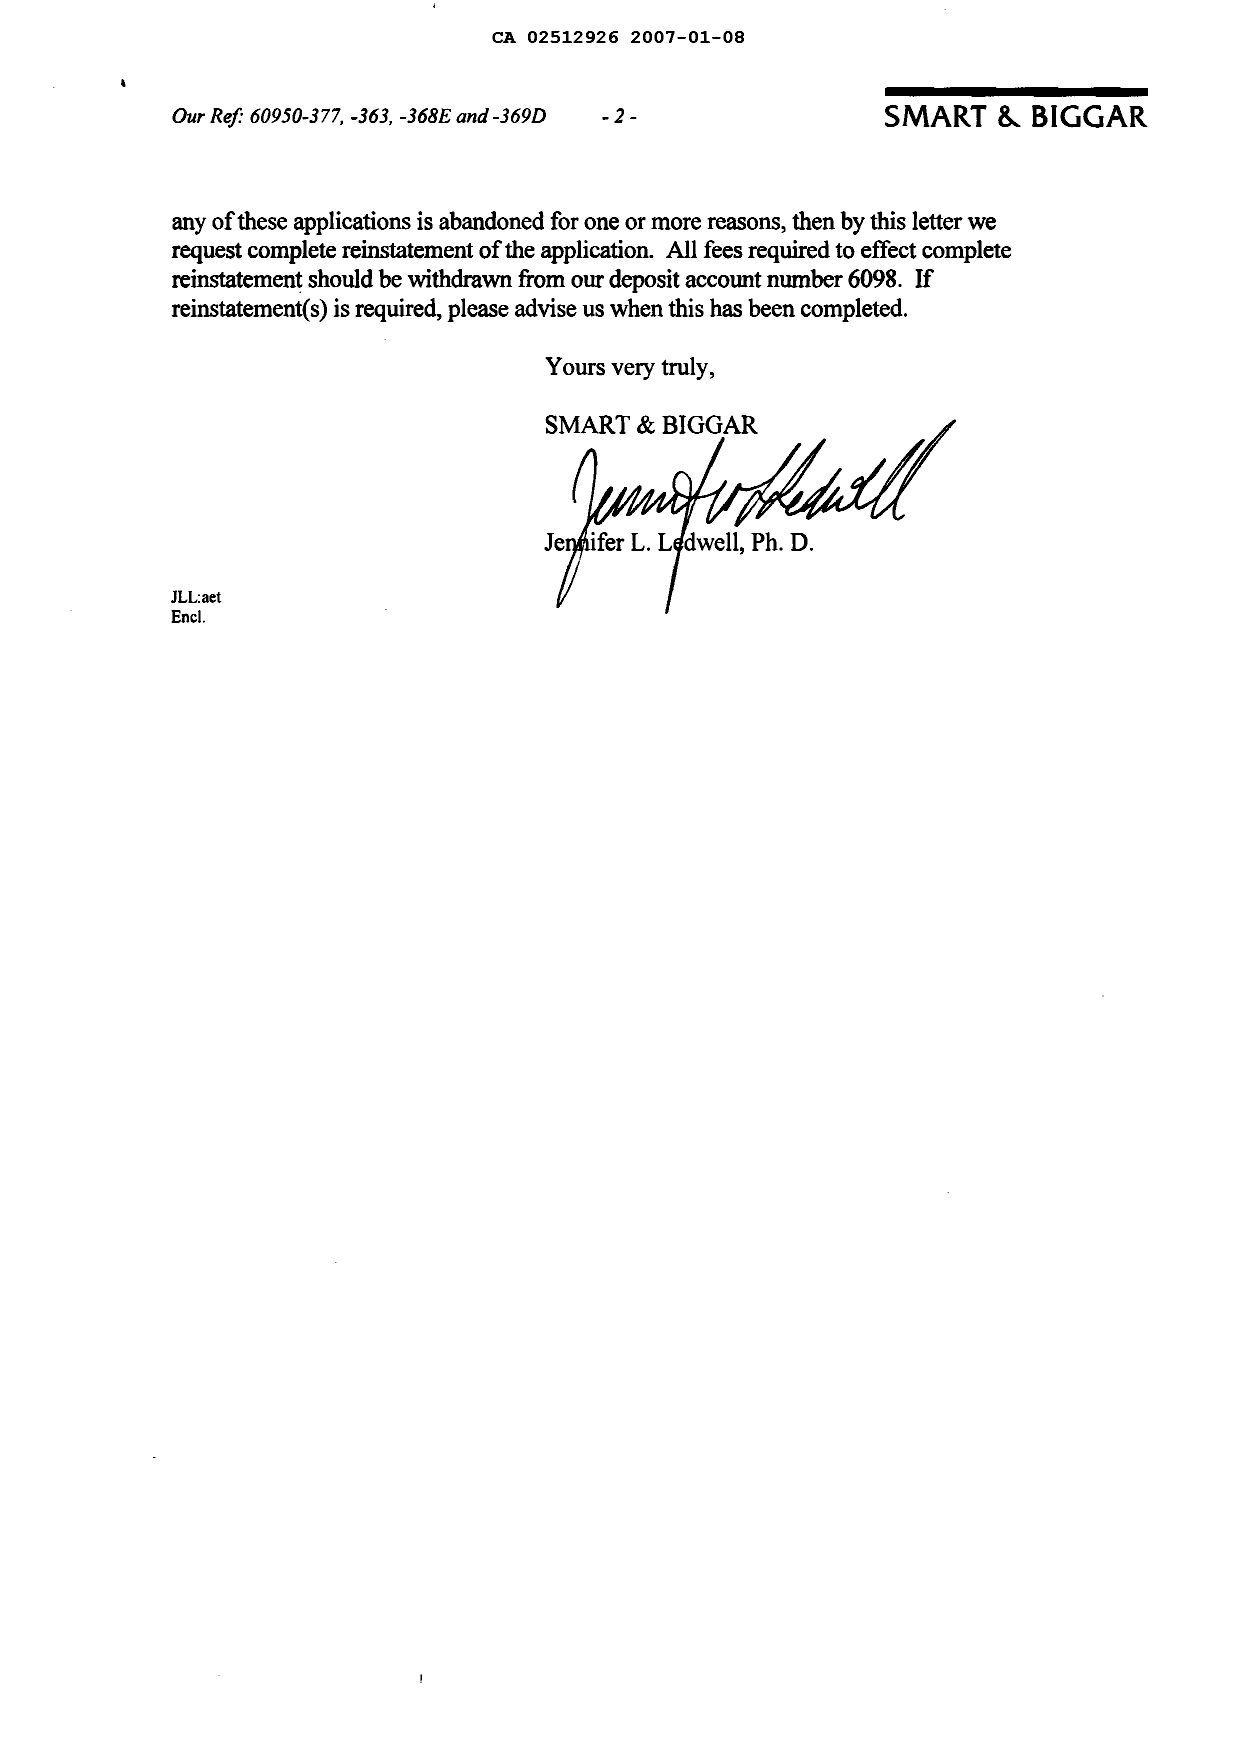 Canadian Patent Document 2157288. Correspondence 20070108. Image 2 of 4